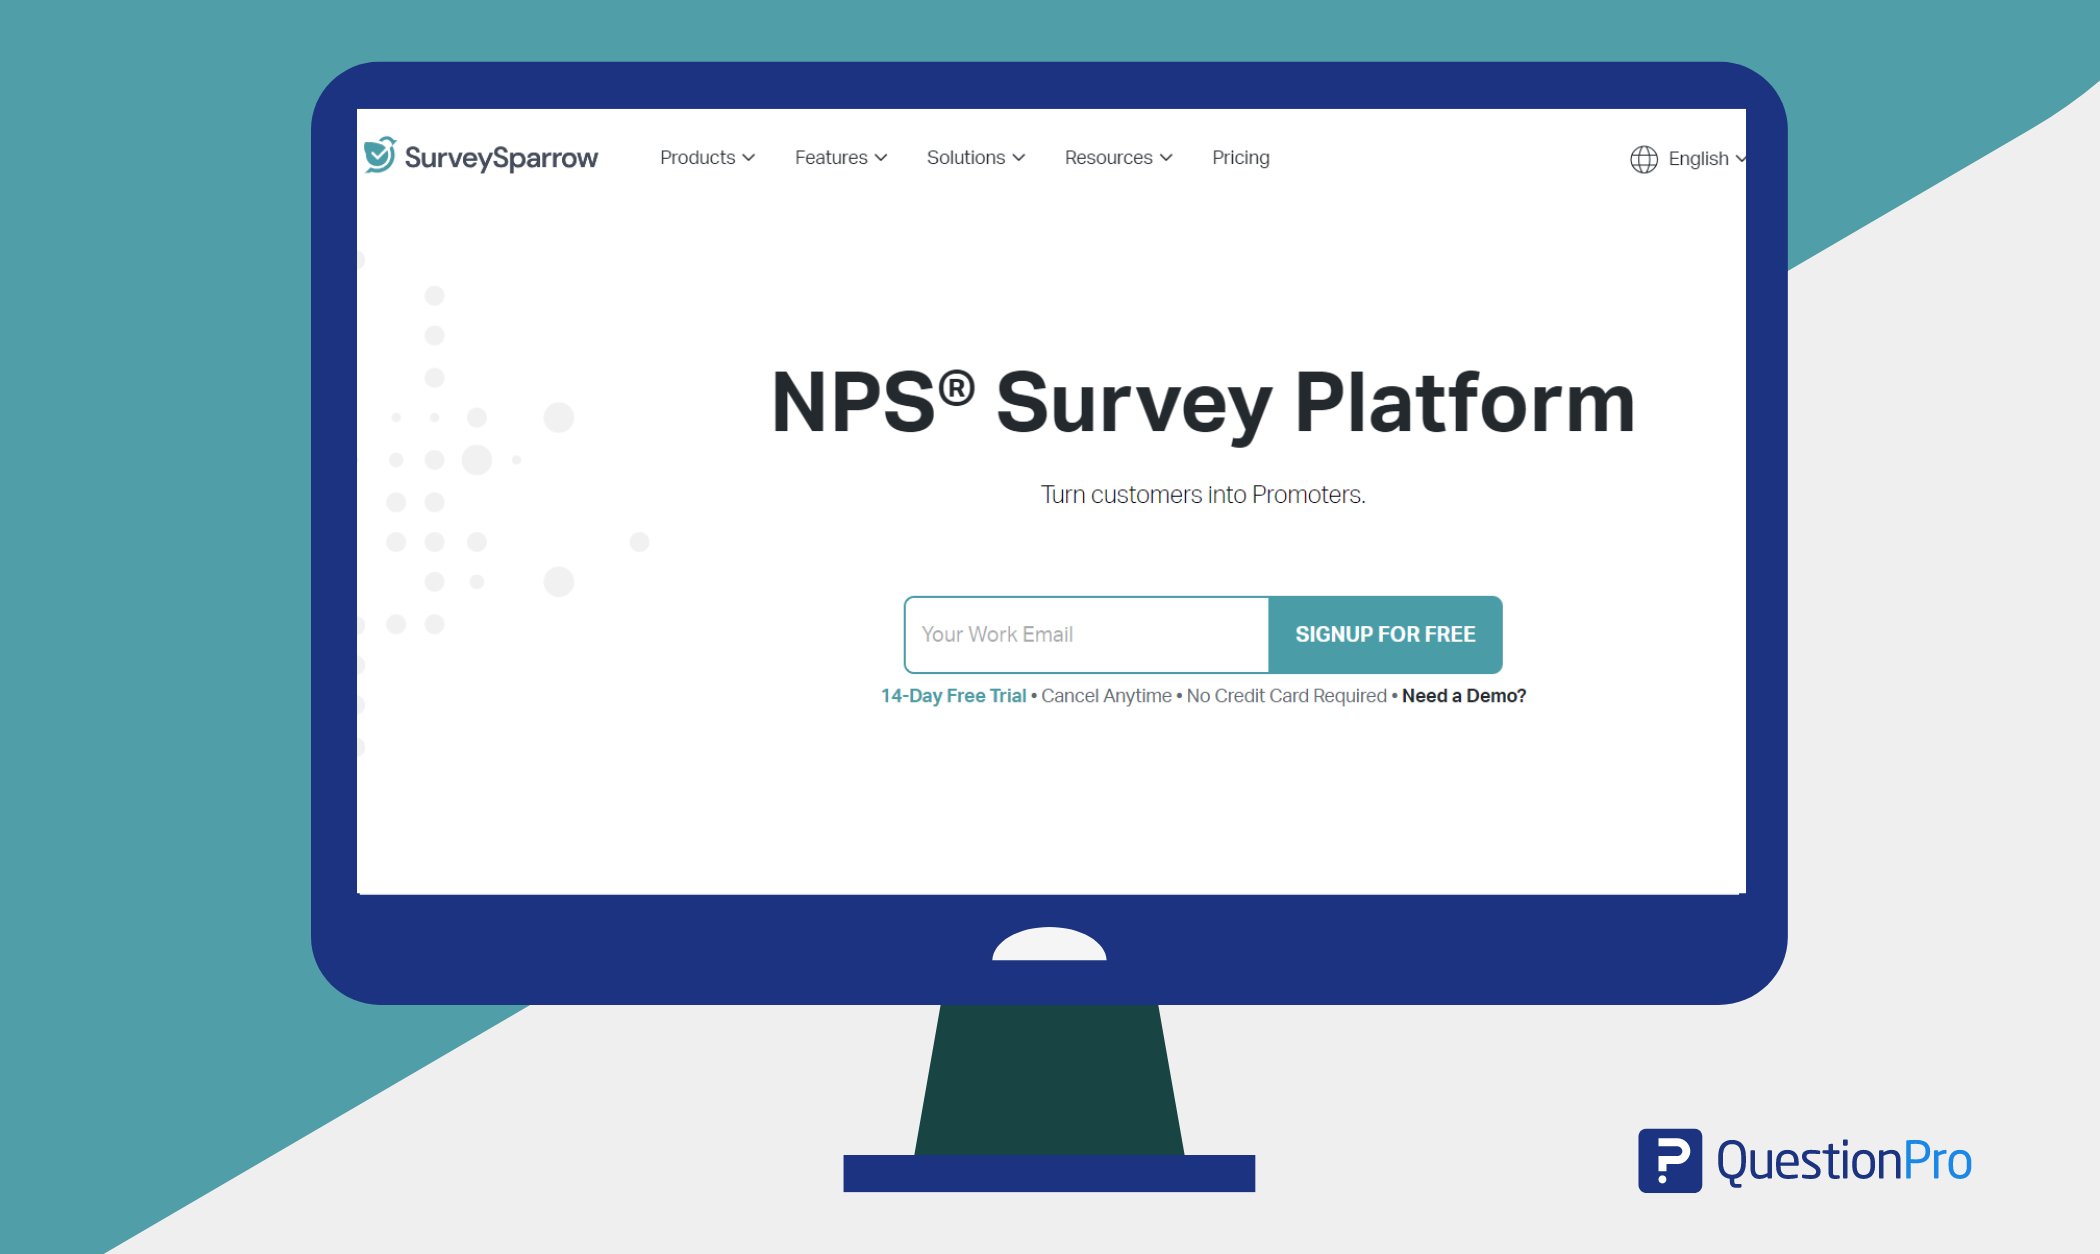 surveysparrow-nps-survey-platform